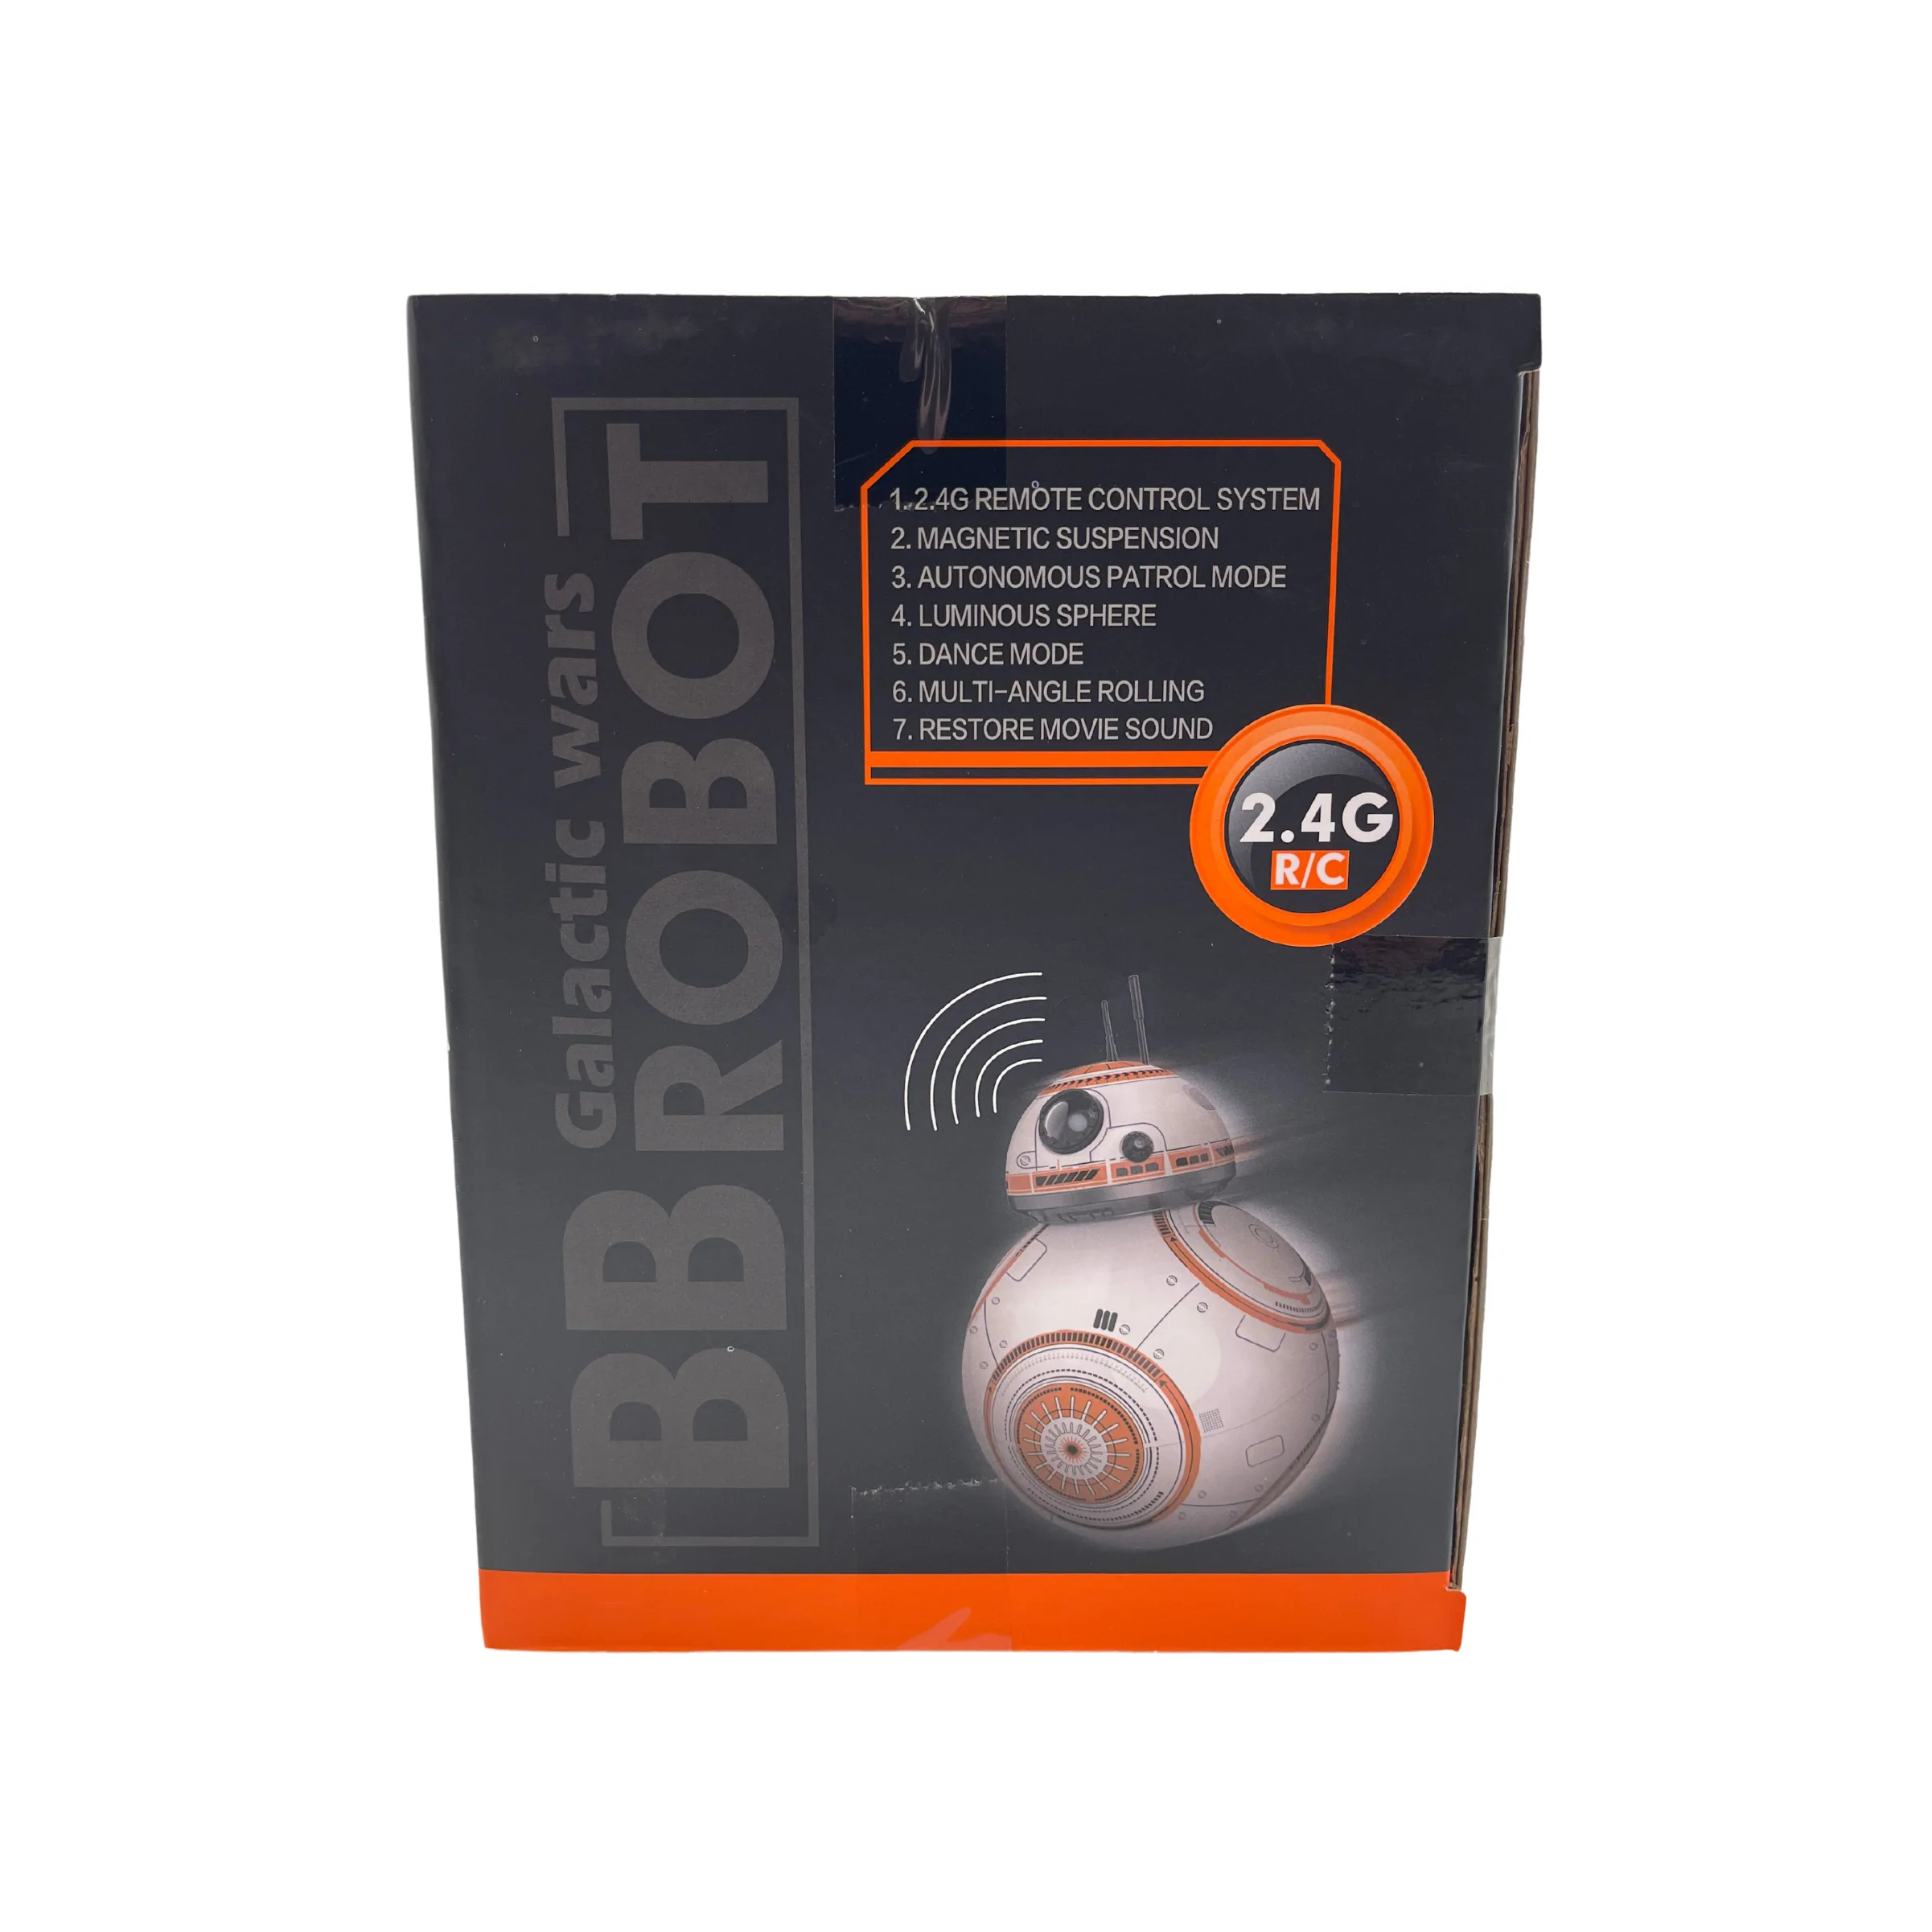 Galactic Wars BB Robot / Remote Control Toy / Robotic Ball Robot **DEALS**